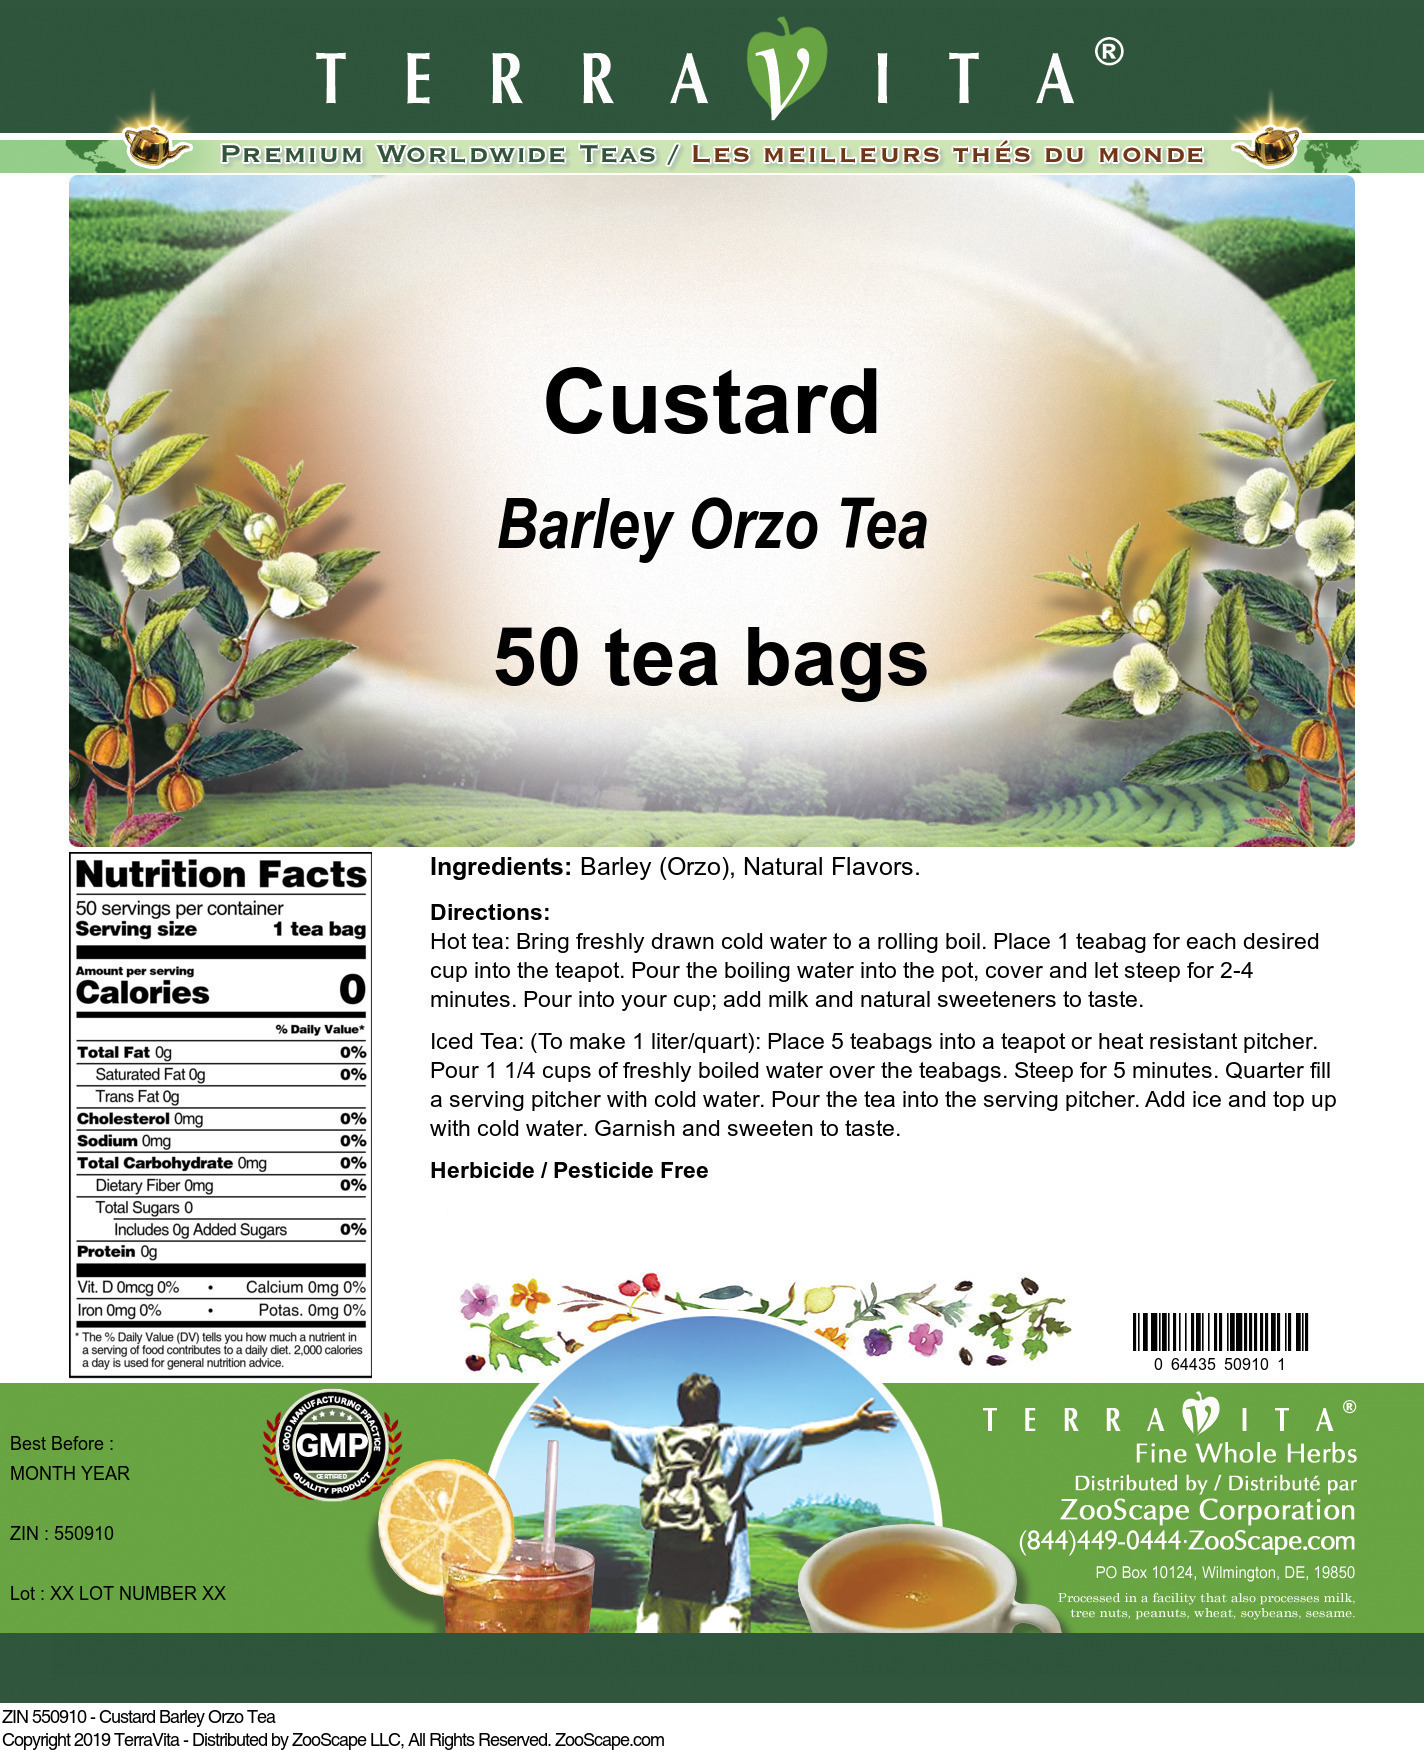 Custard Barley Orzo Tea - Label